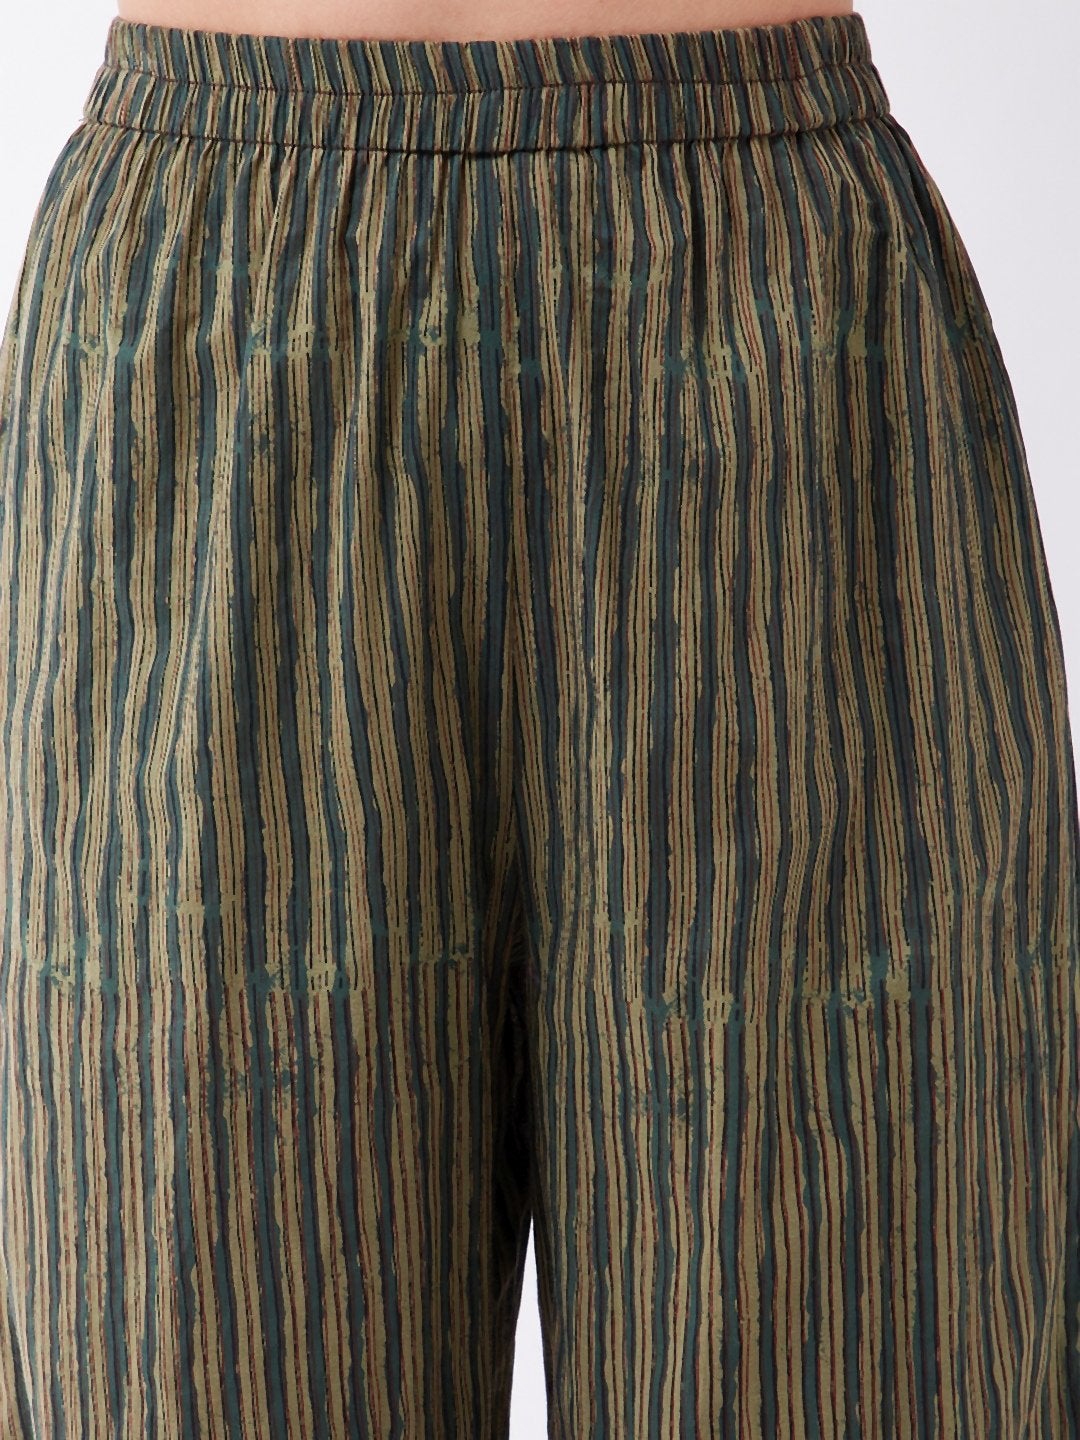 Women's Dark Green Striped Pant - InWeave